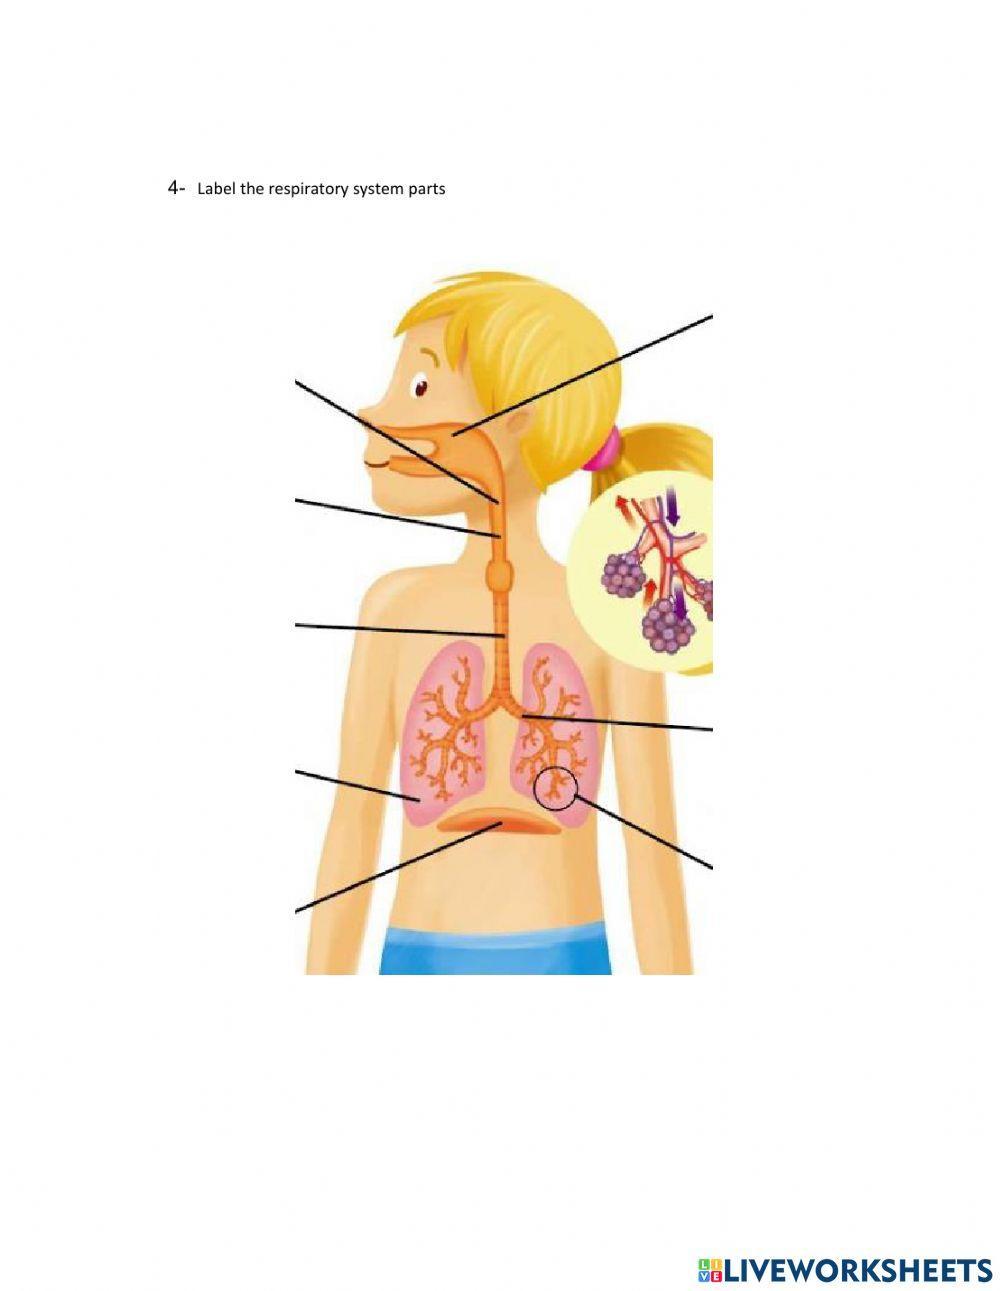 Respiratory system model